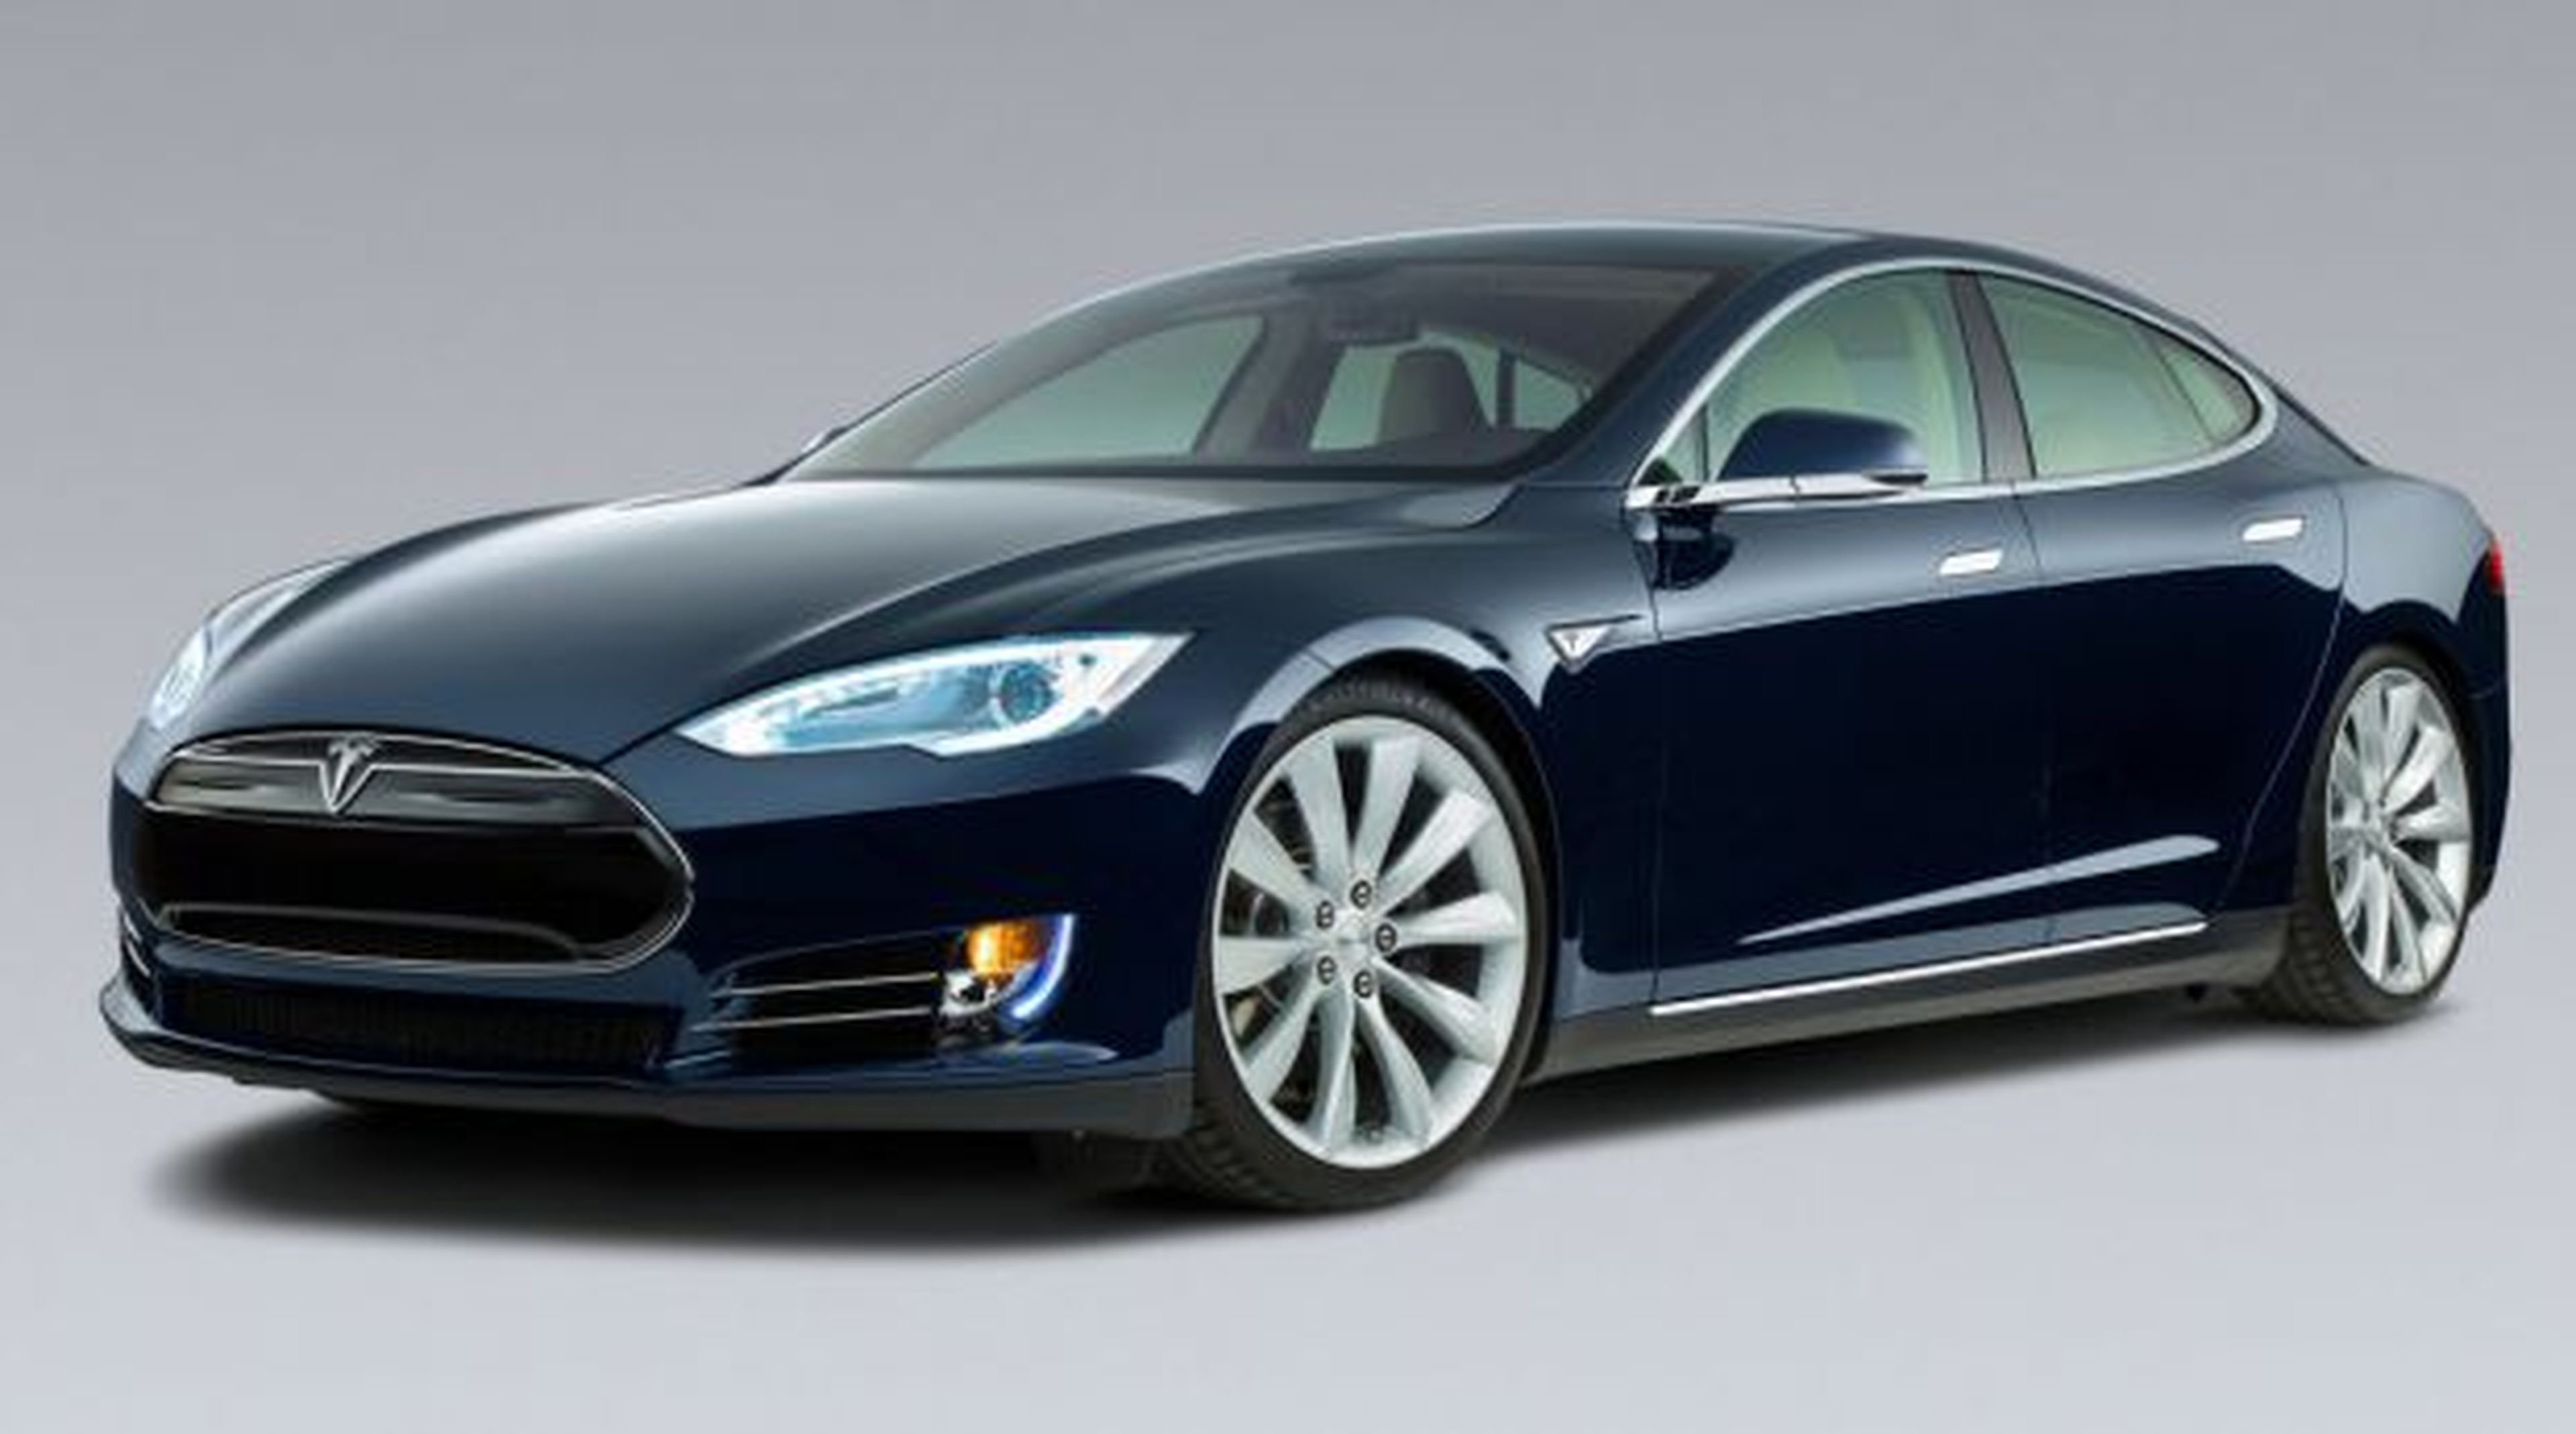 Coche de la marca Tesla, Modelo S